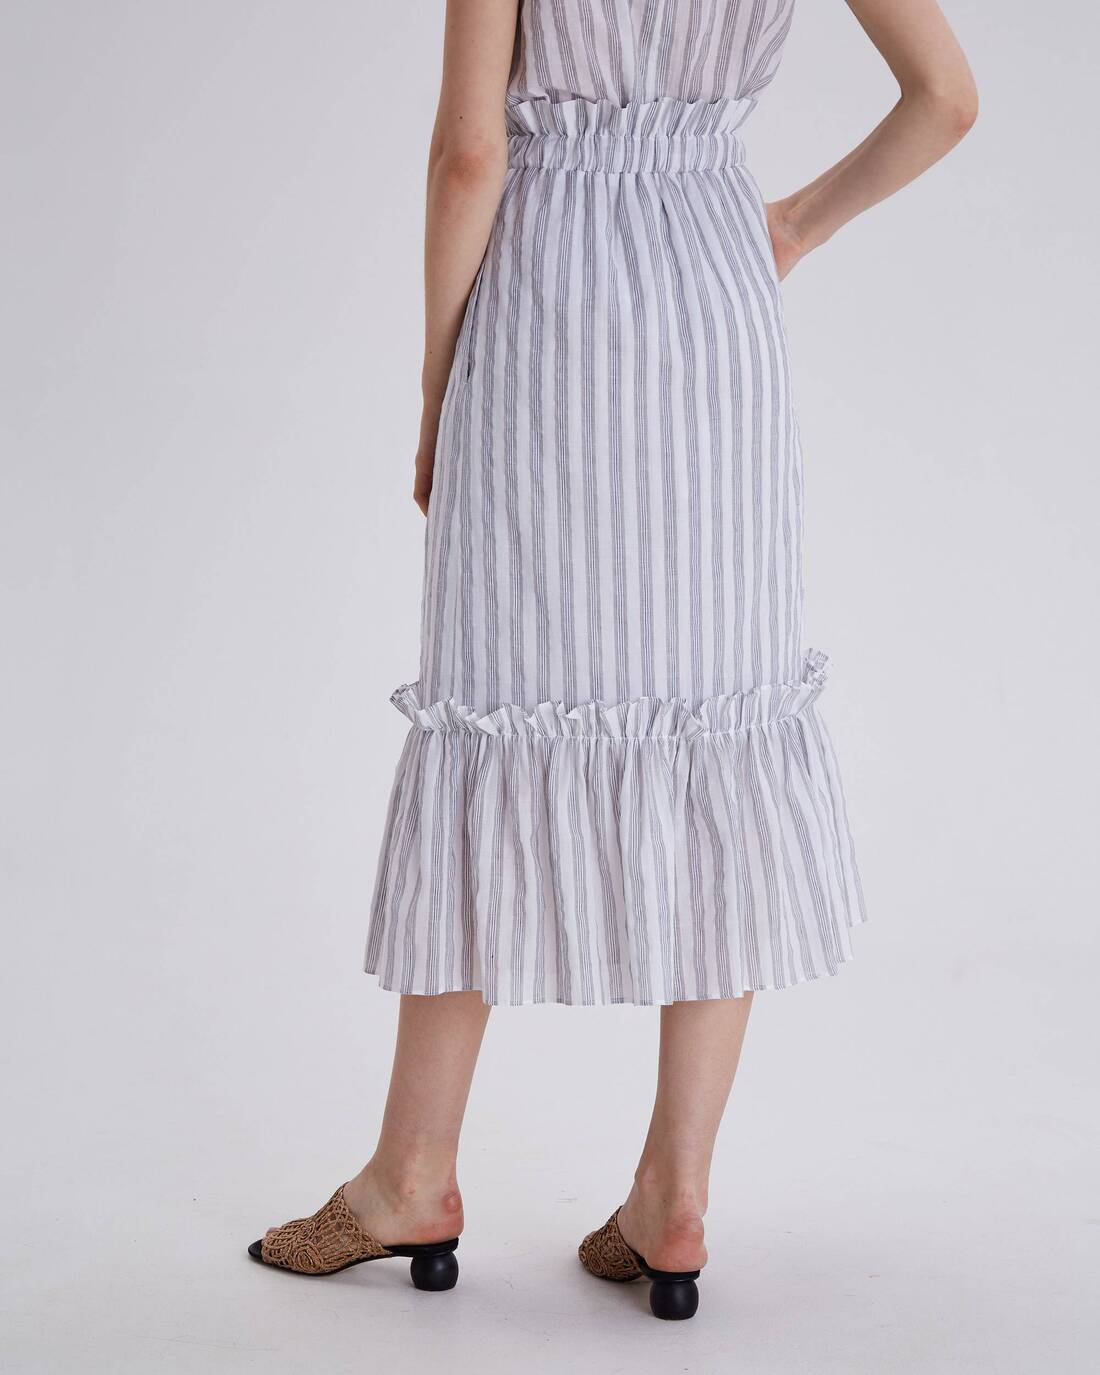 Midi-length skirt with volant